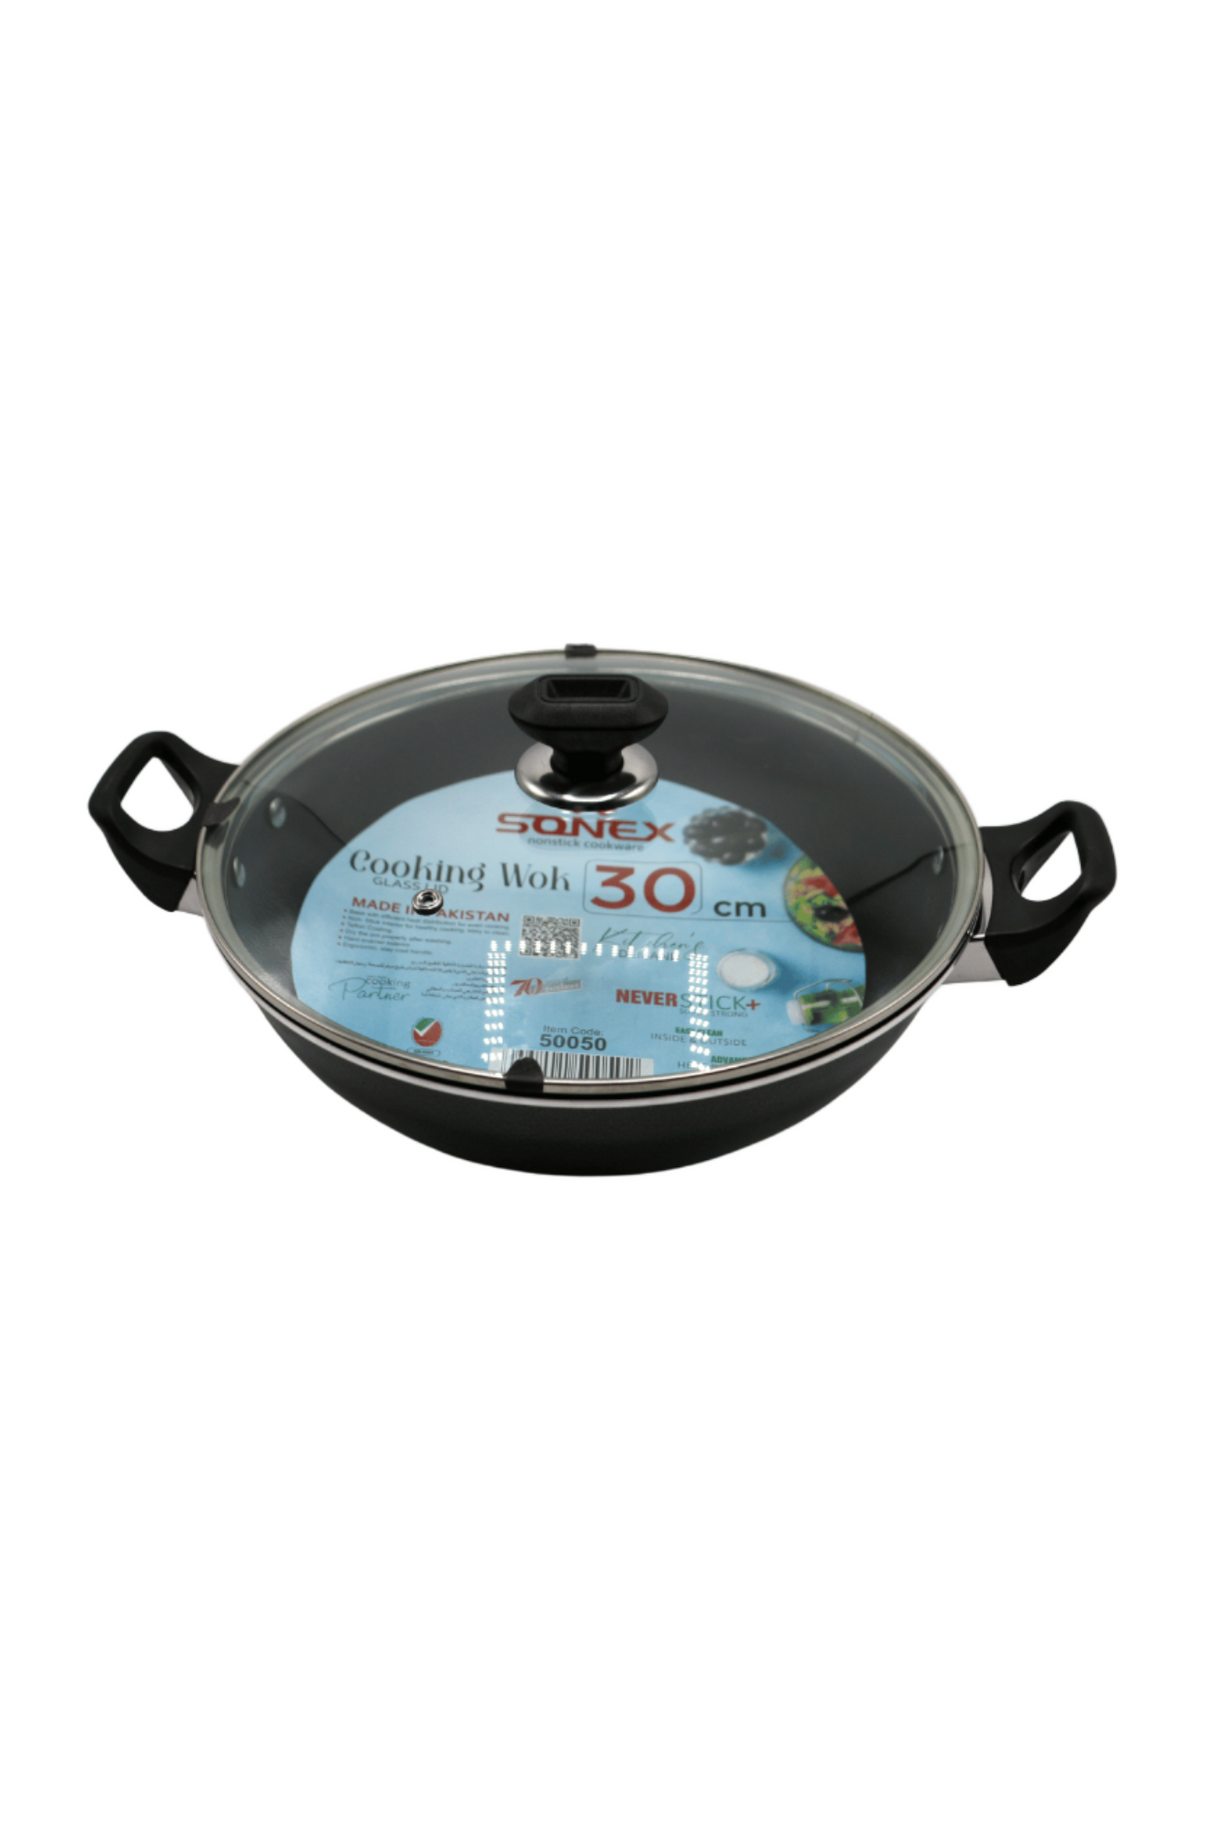 sonex ns cooking wok 30cm 50050